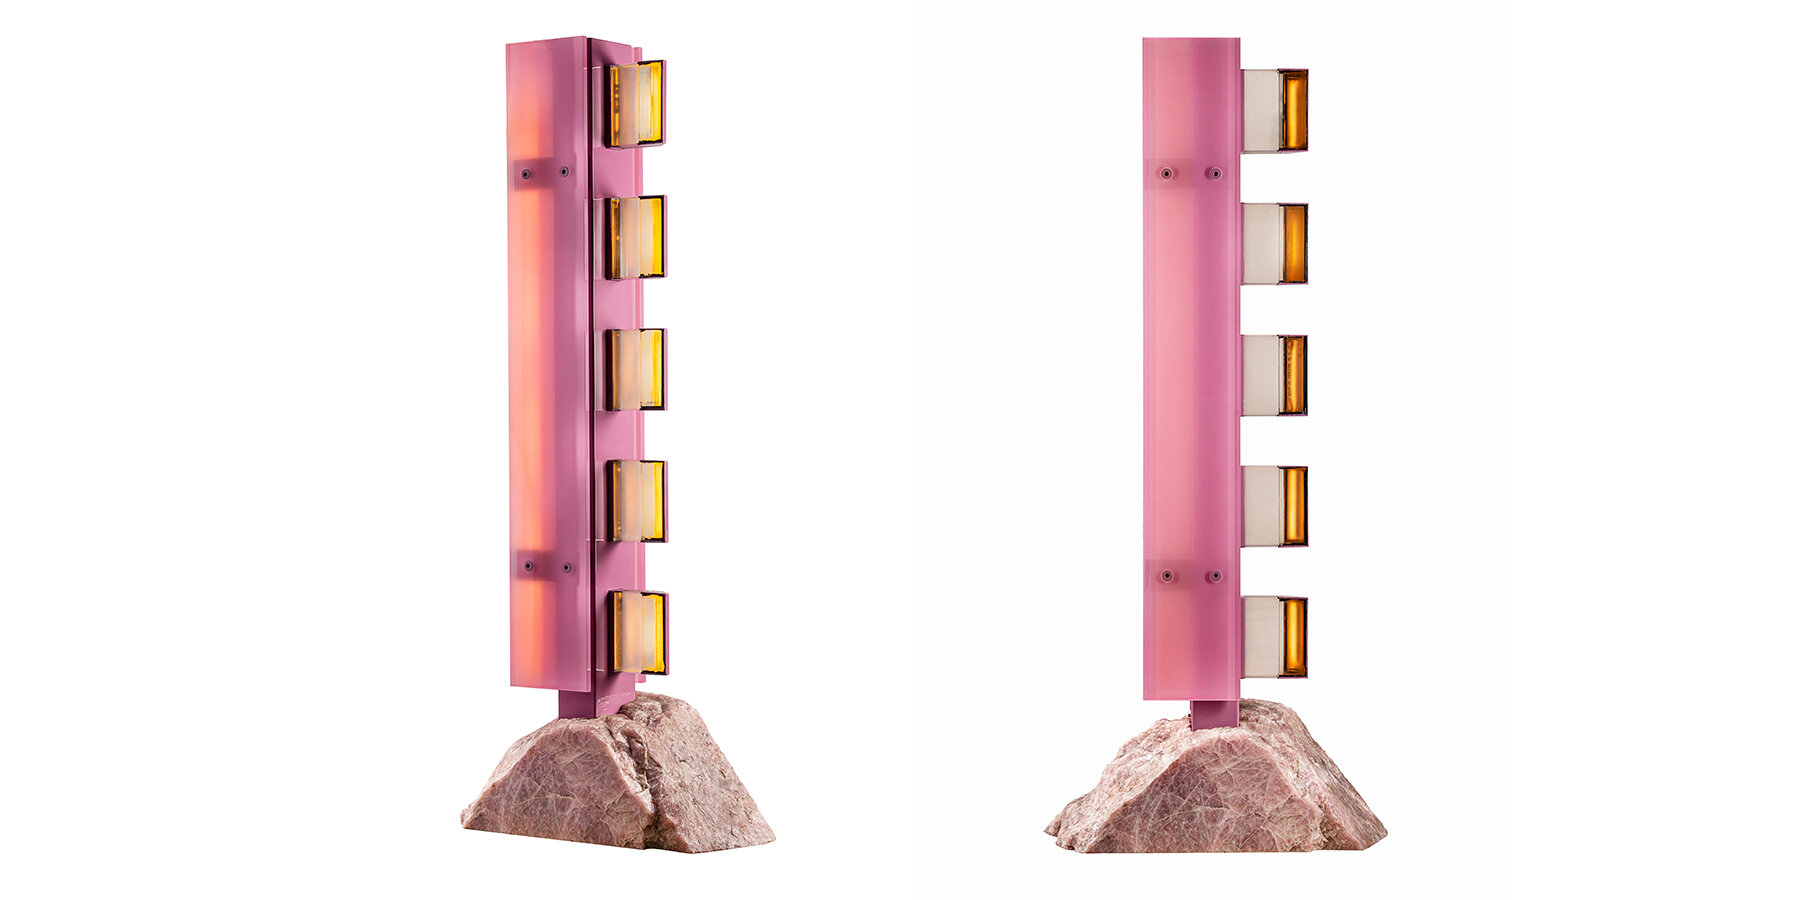 friedman benda exhibits enrico marone cinzano's rosa tank lamp at design miami/ basel